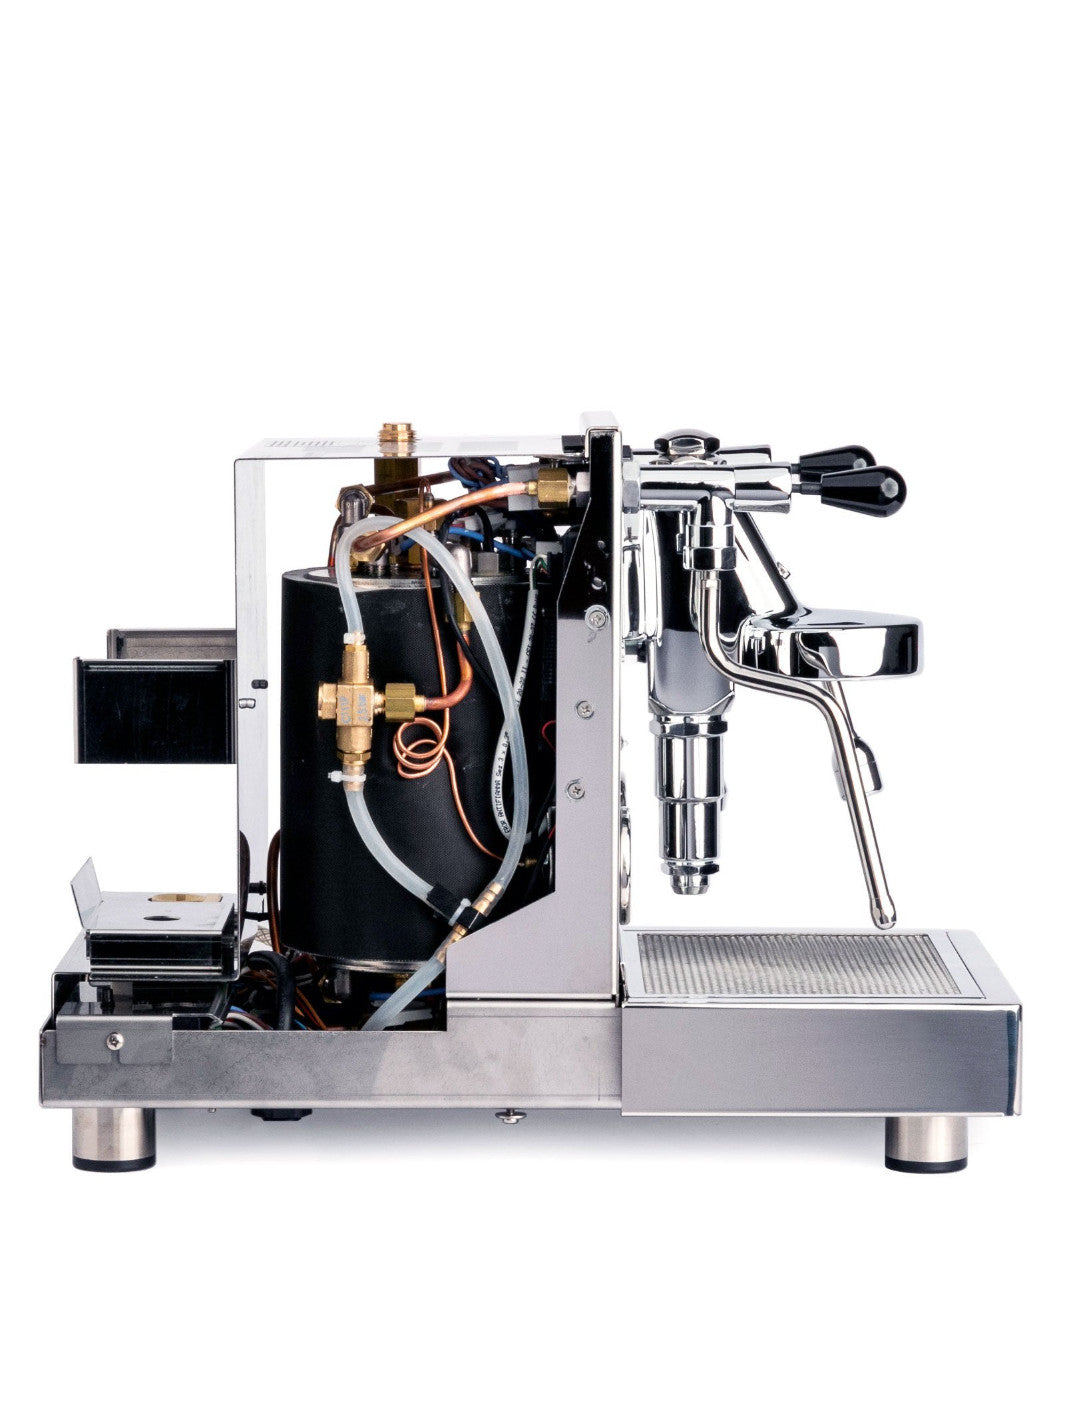 LUCCA X58 Espresso Machine